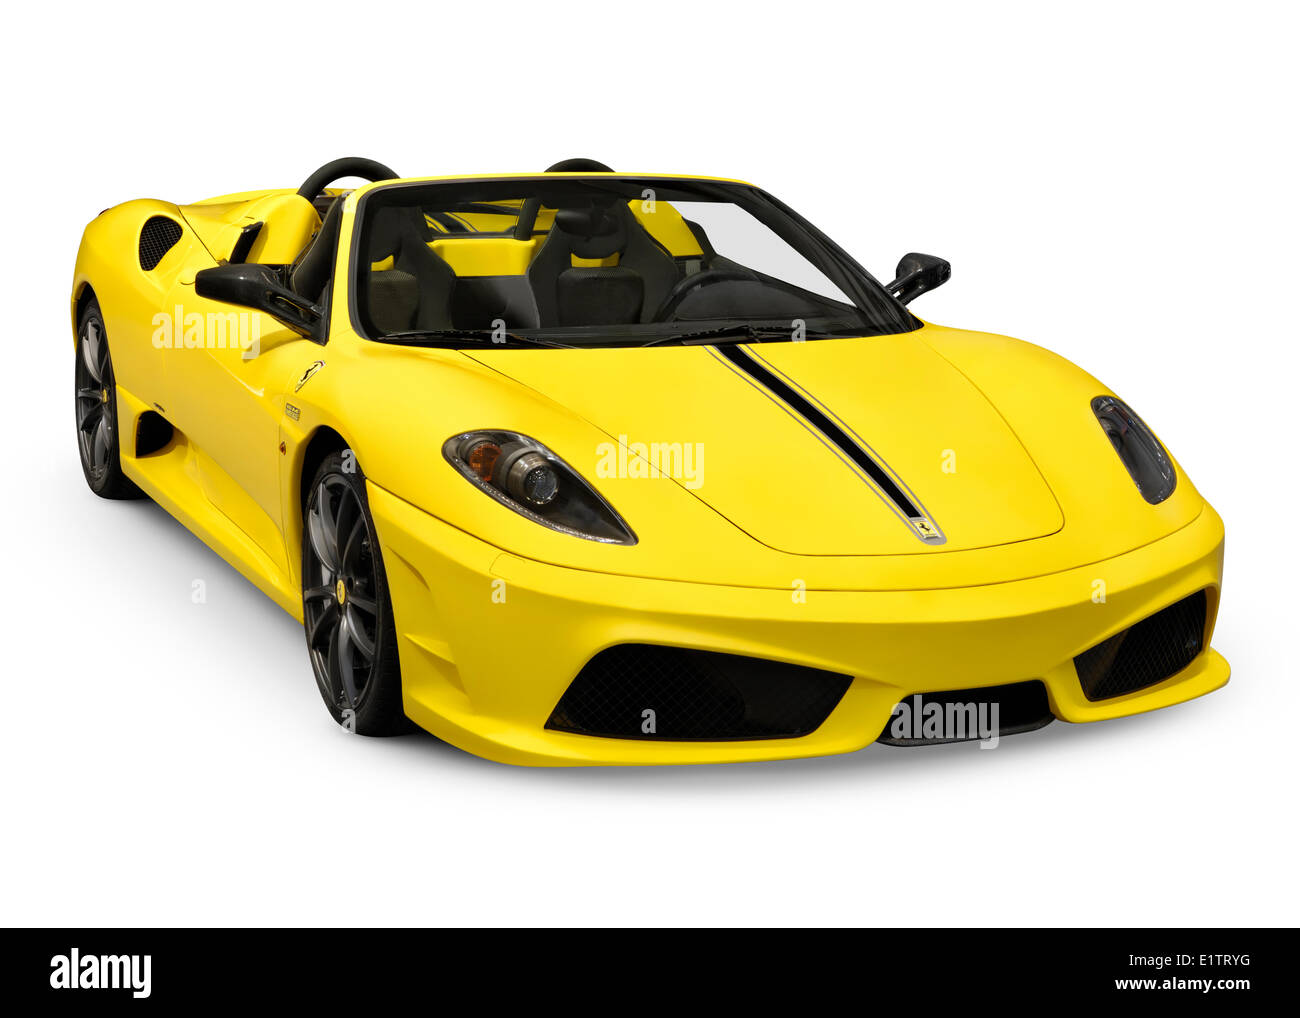 Yellow Ferrari 16M Scuderia Spider sports car isolated on white background Stock Photo